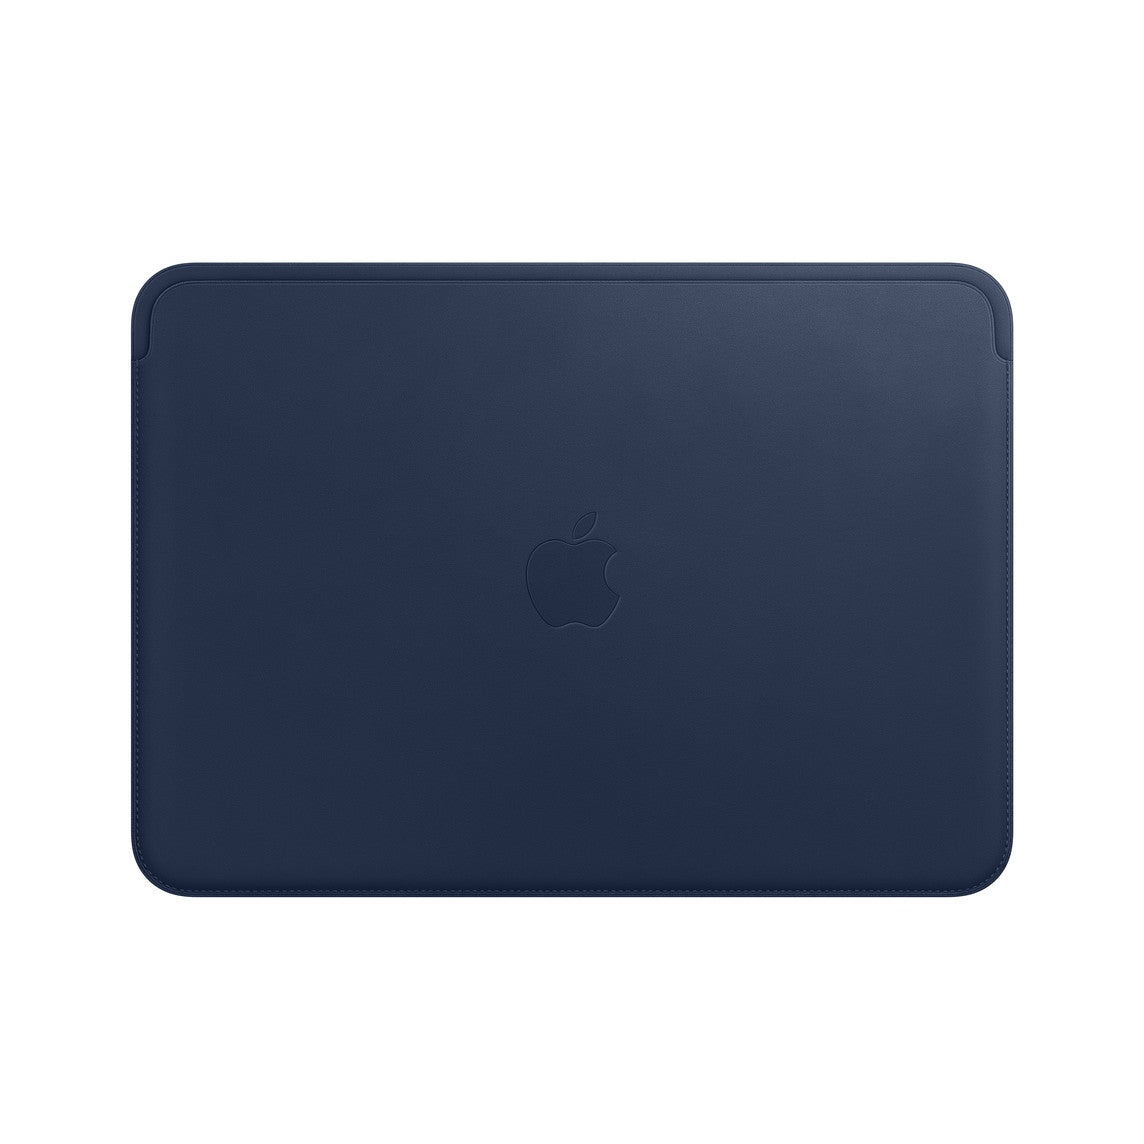 Apple MacBook Pro 15 Leather Sleeve - Midnight Blue Midnight Blue New - Sealed